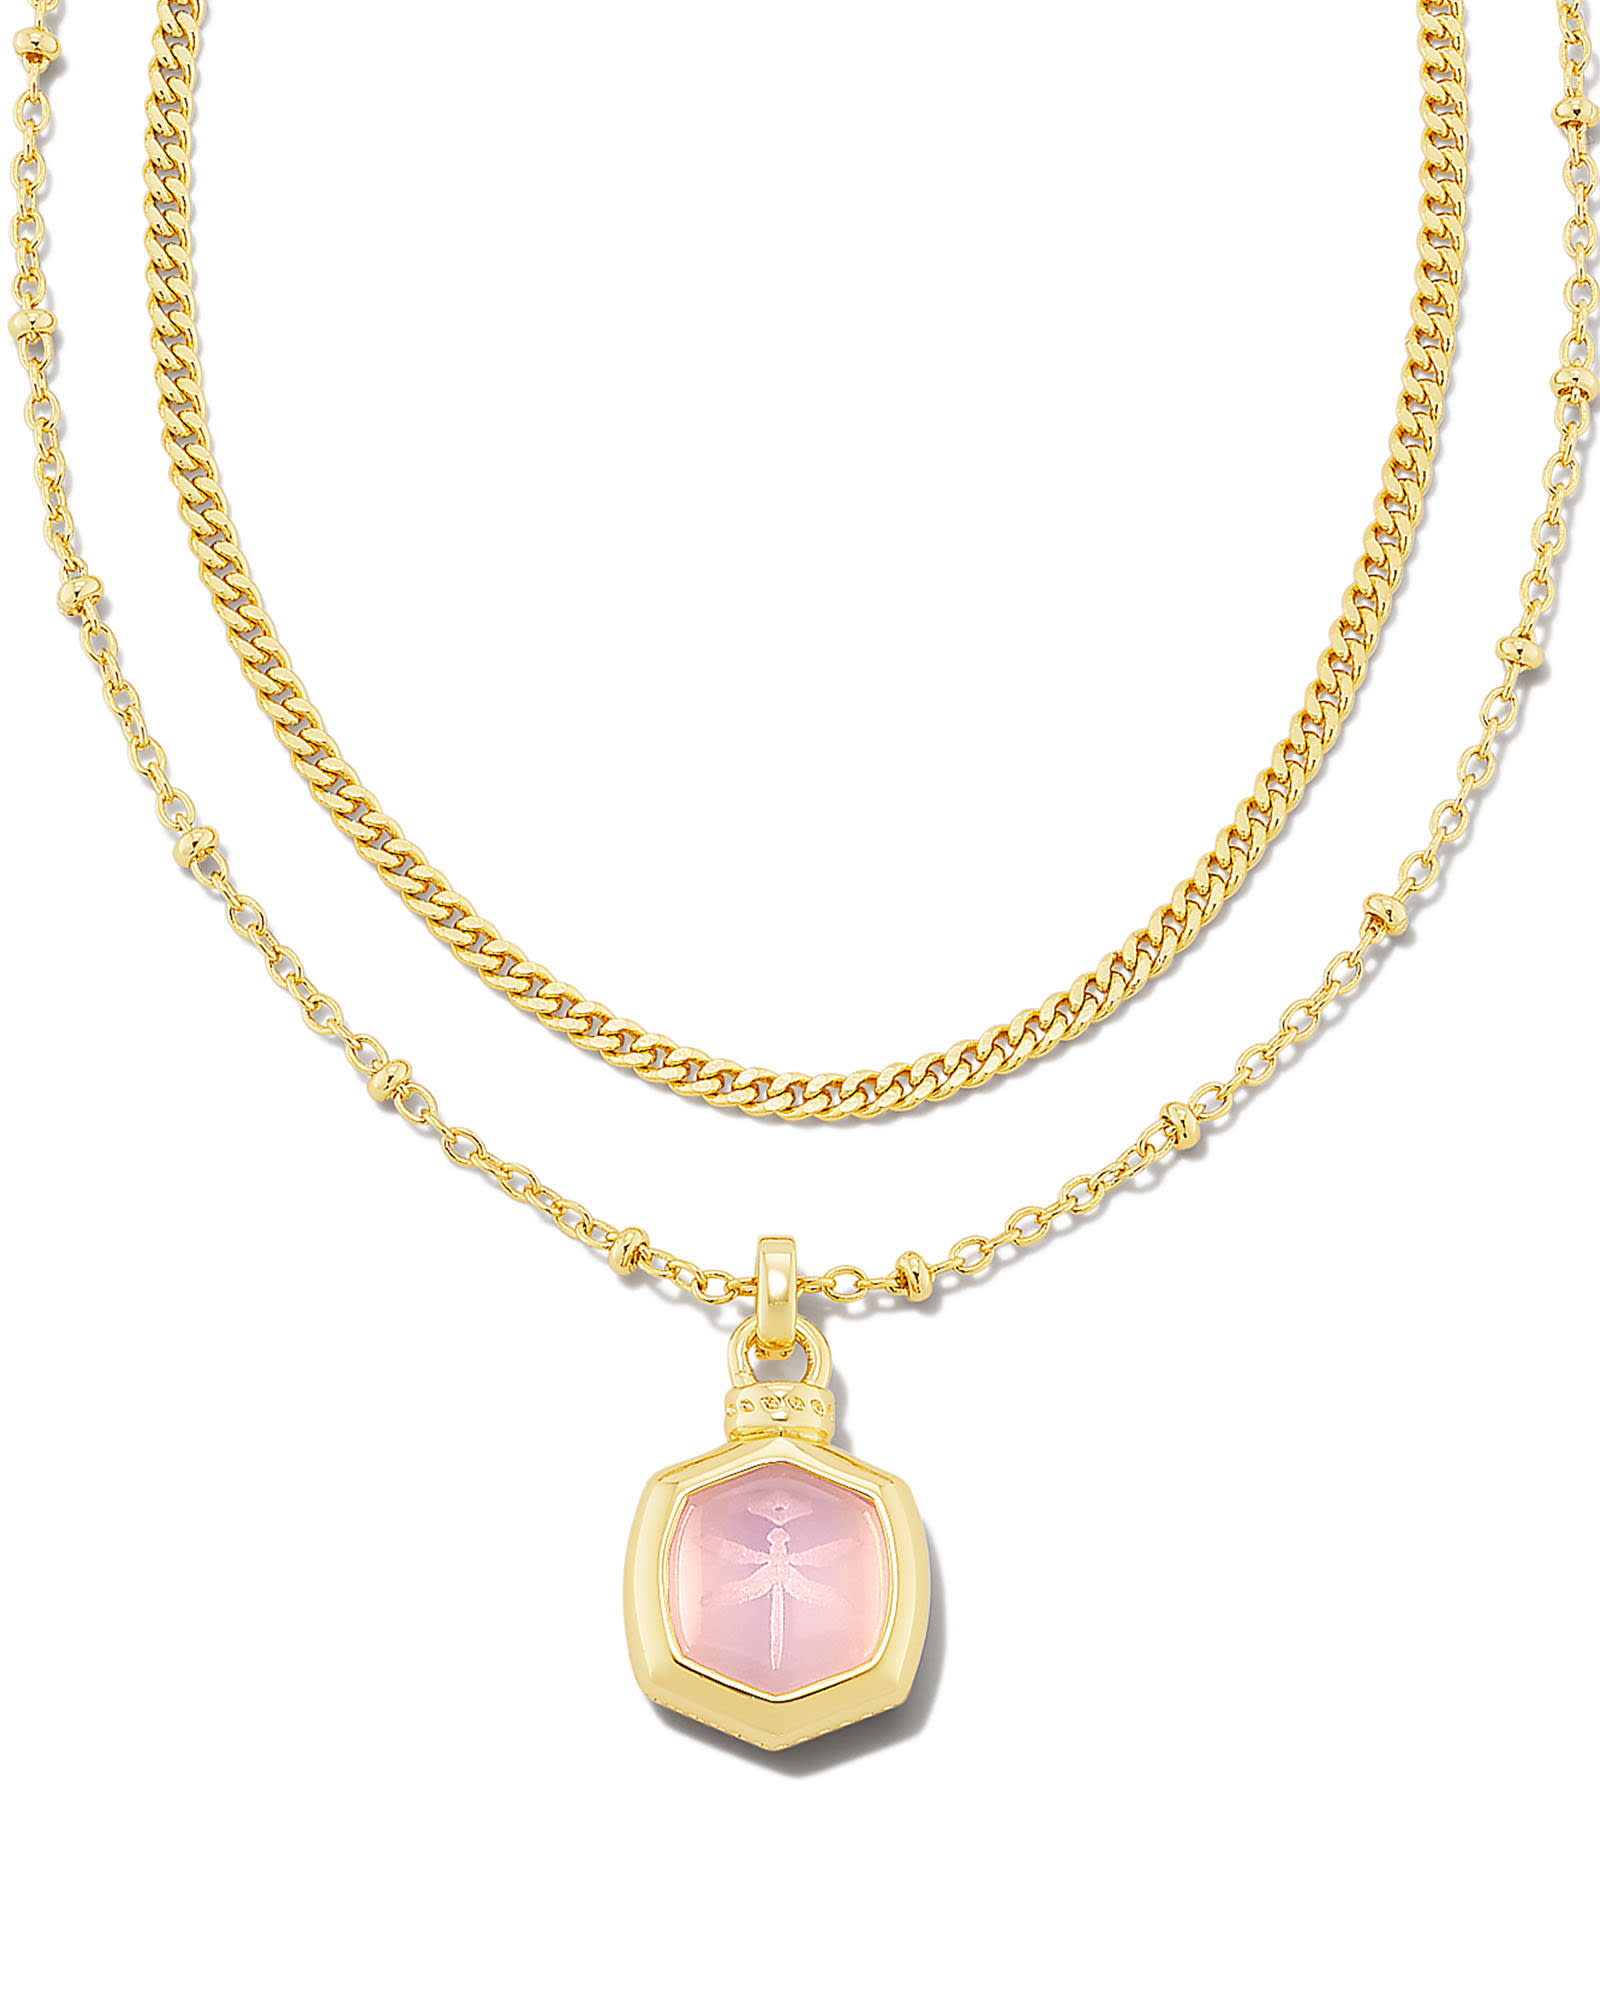 Davie Intaglio Gold Multi Strand Necklace in Pink Opalite Glass Dragonfly